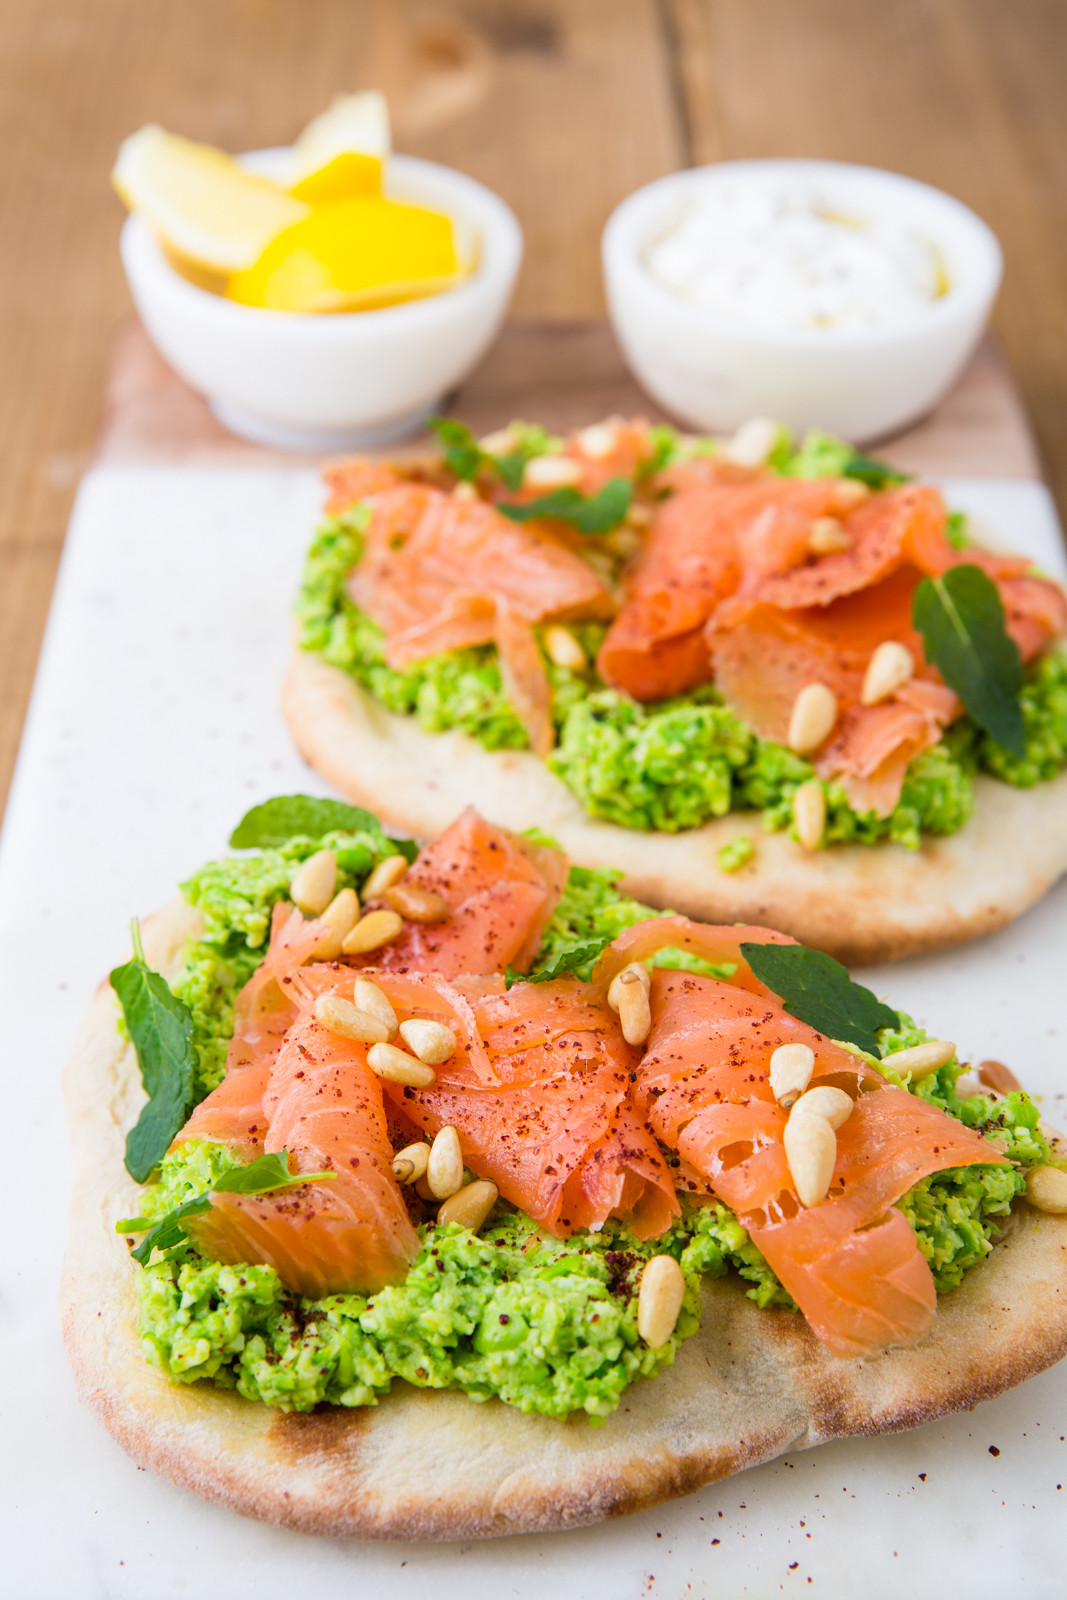 Healthy Smoked Salmon Recipes
 Smoked Salmon & Hummus Lunch Recipes